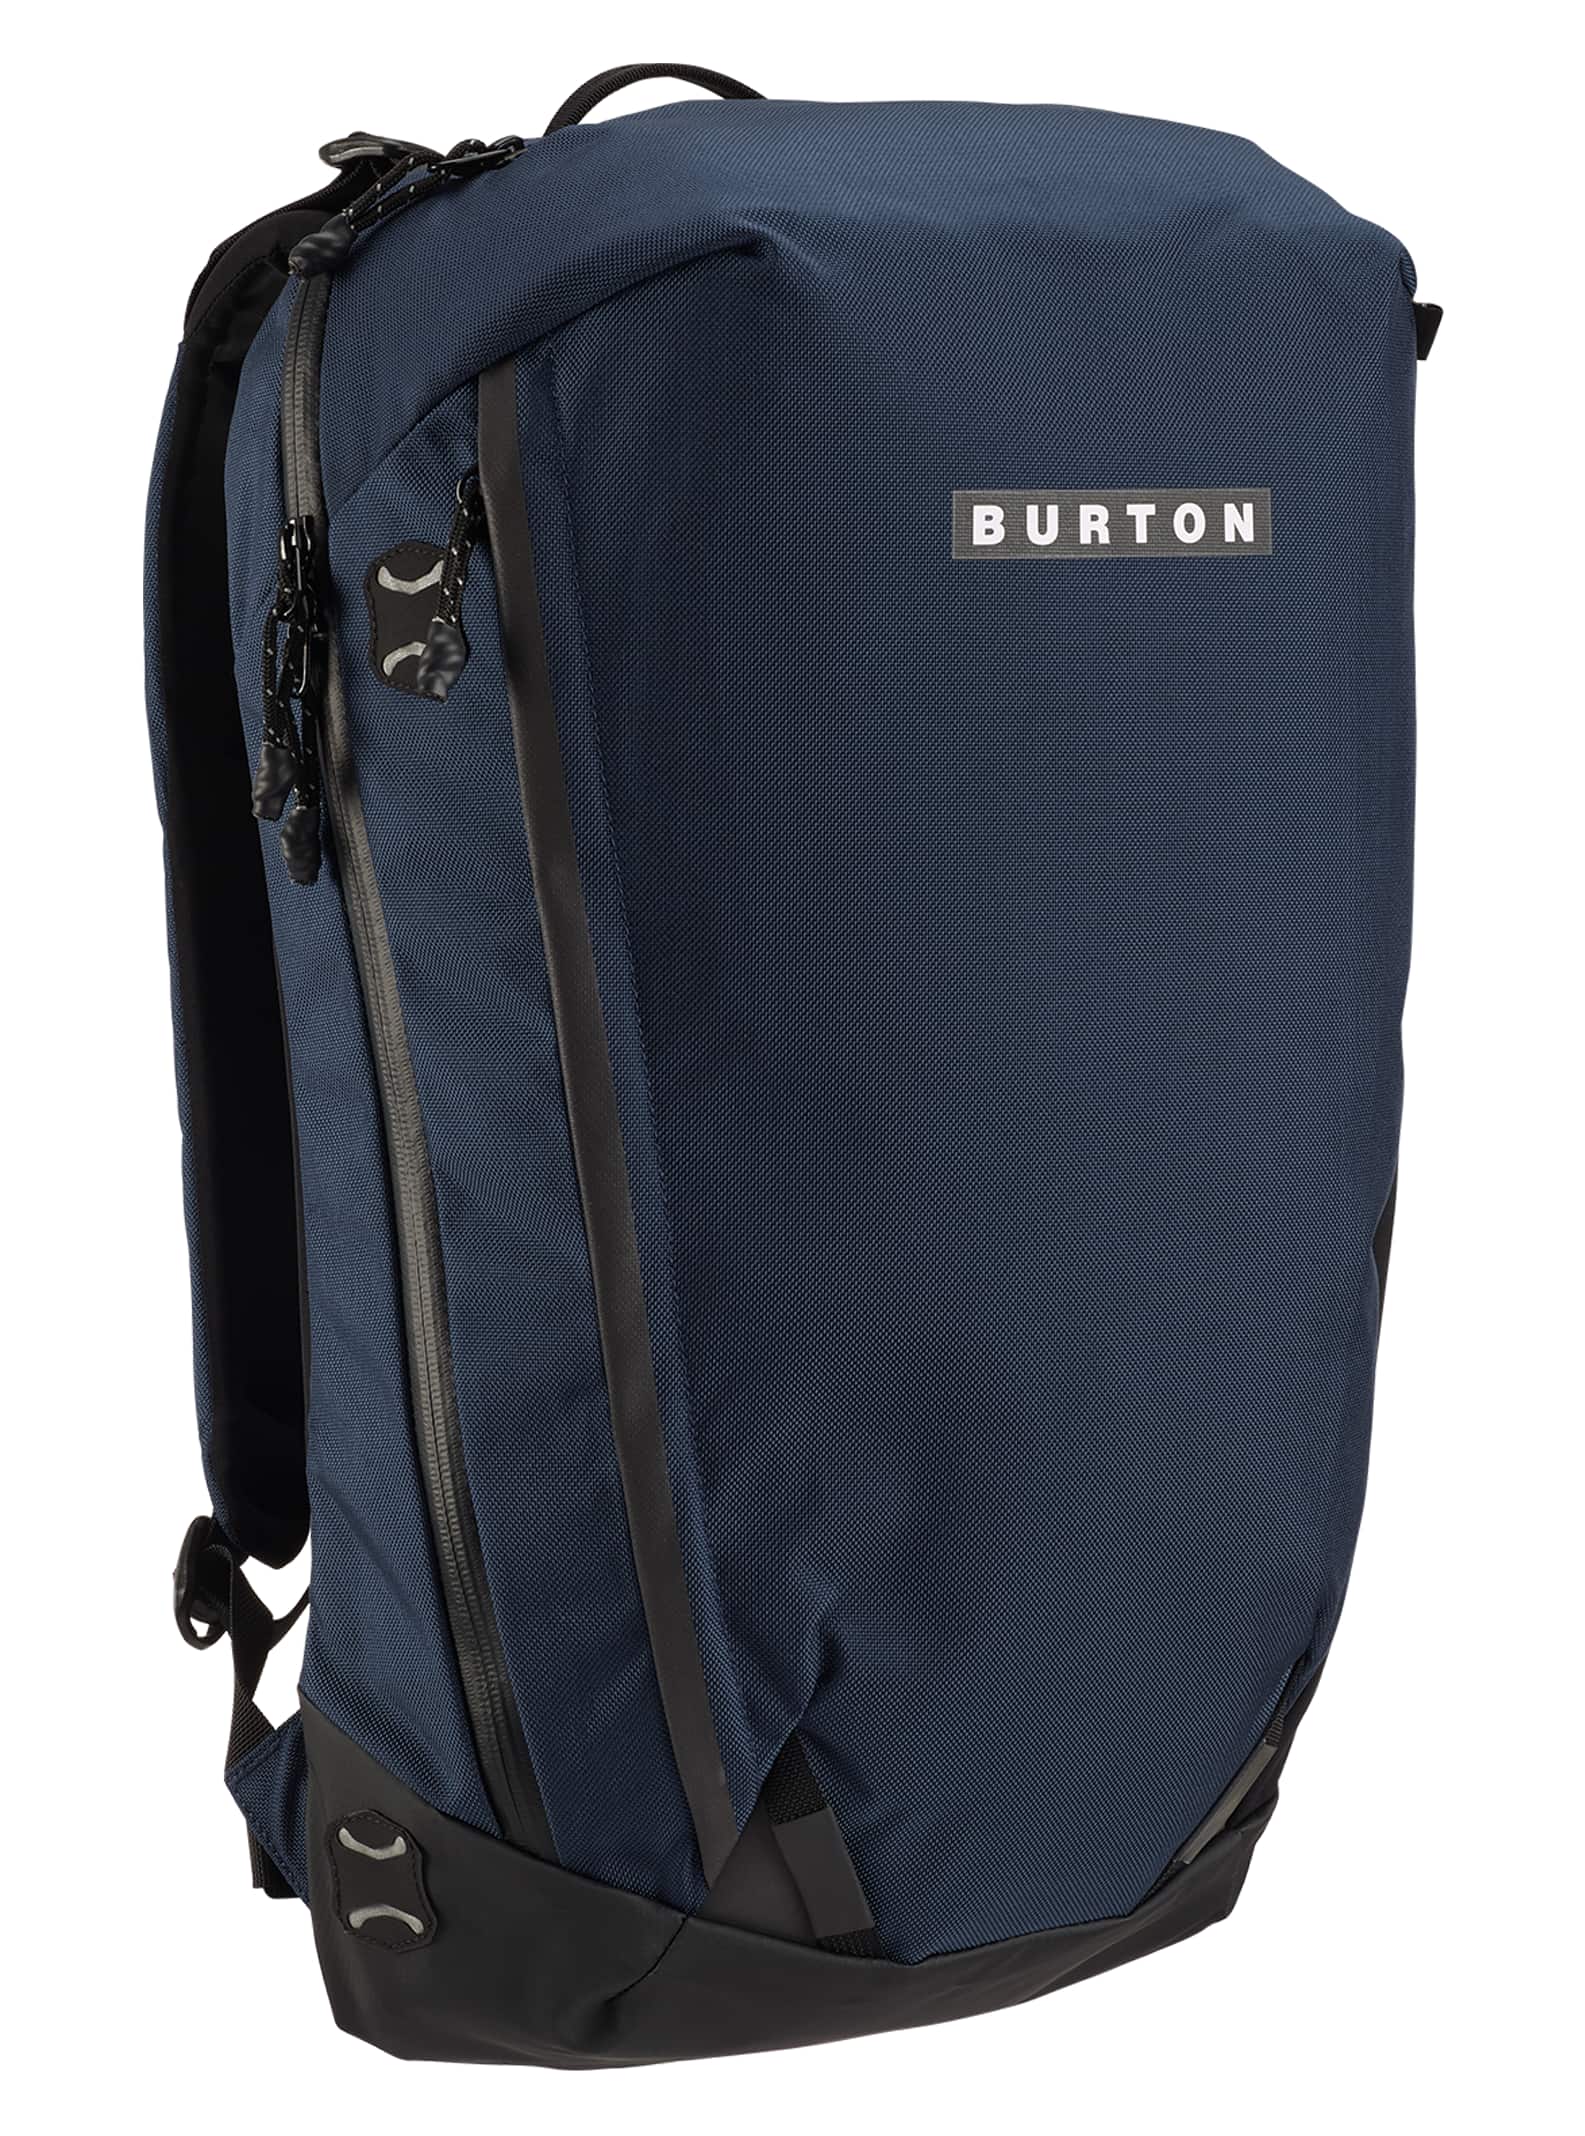 Burton Gorge 20L Backpack | Burton.com Winter 2021 US